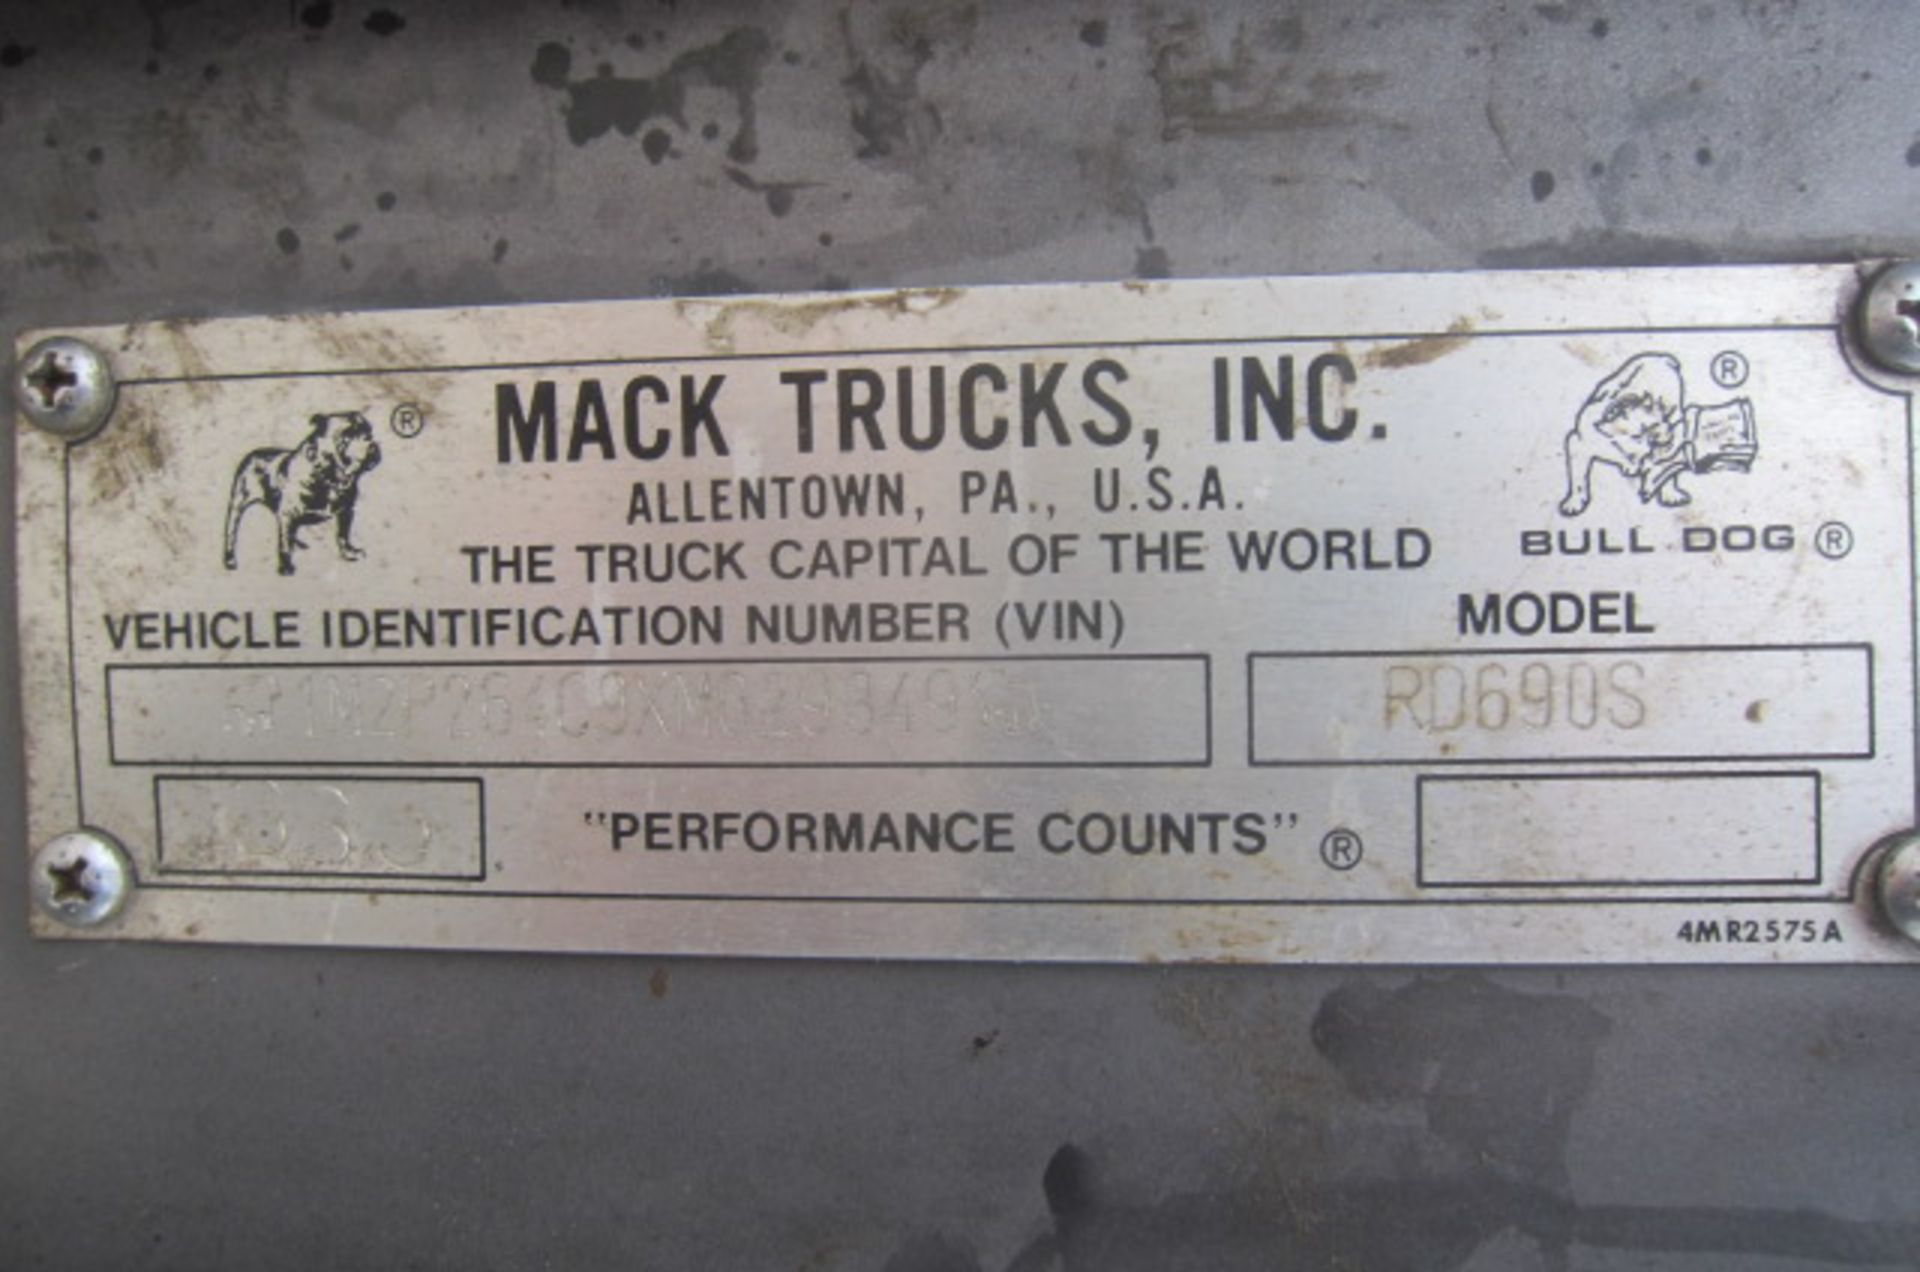 1999 Mack Concrete Mixer Truck, Model Rd690s - Image 8 of 45